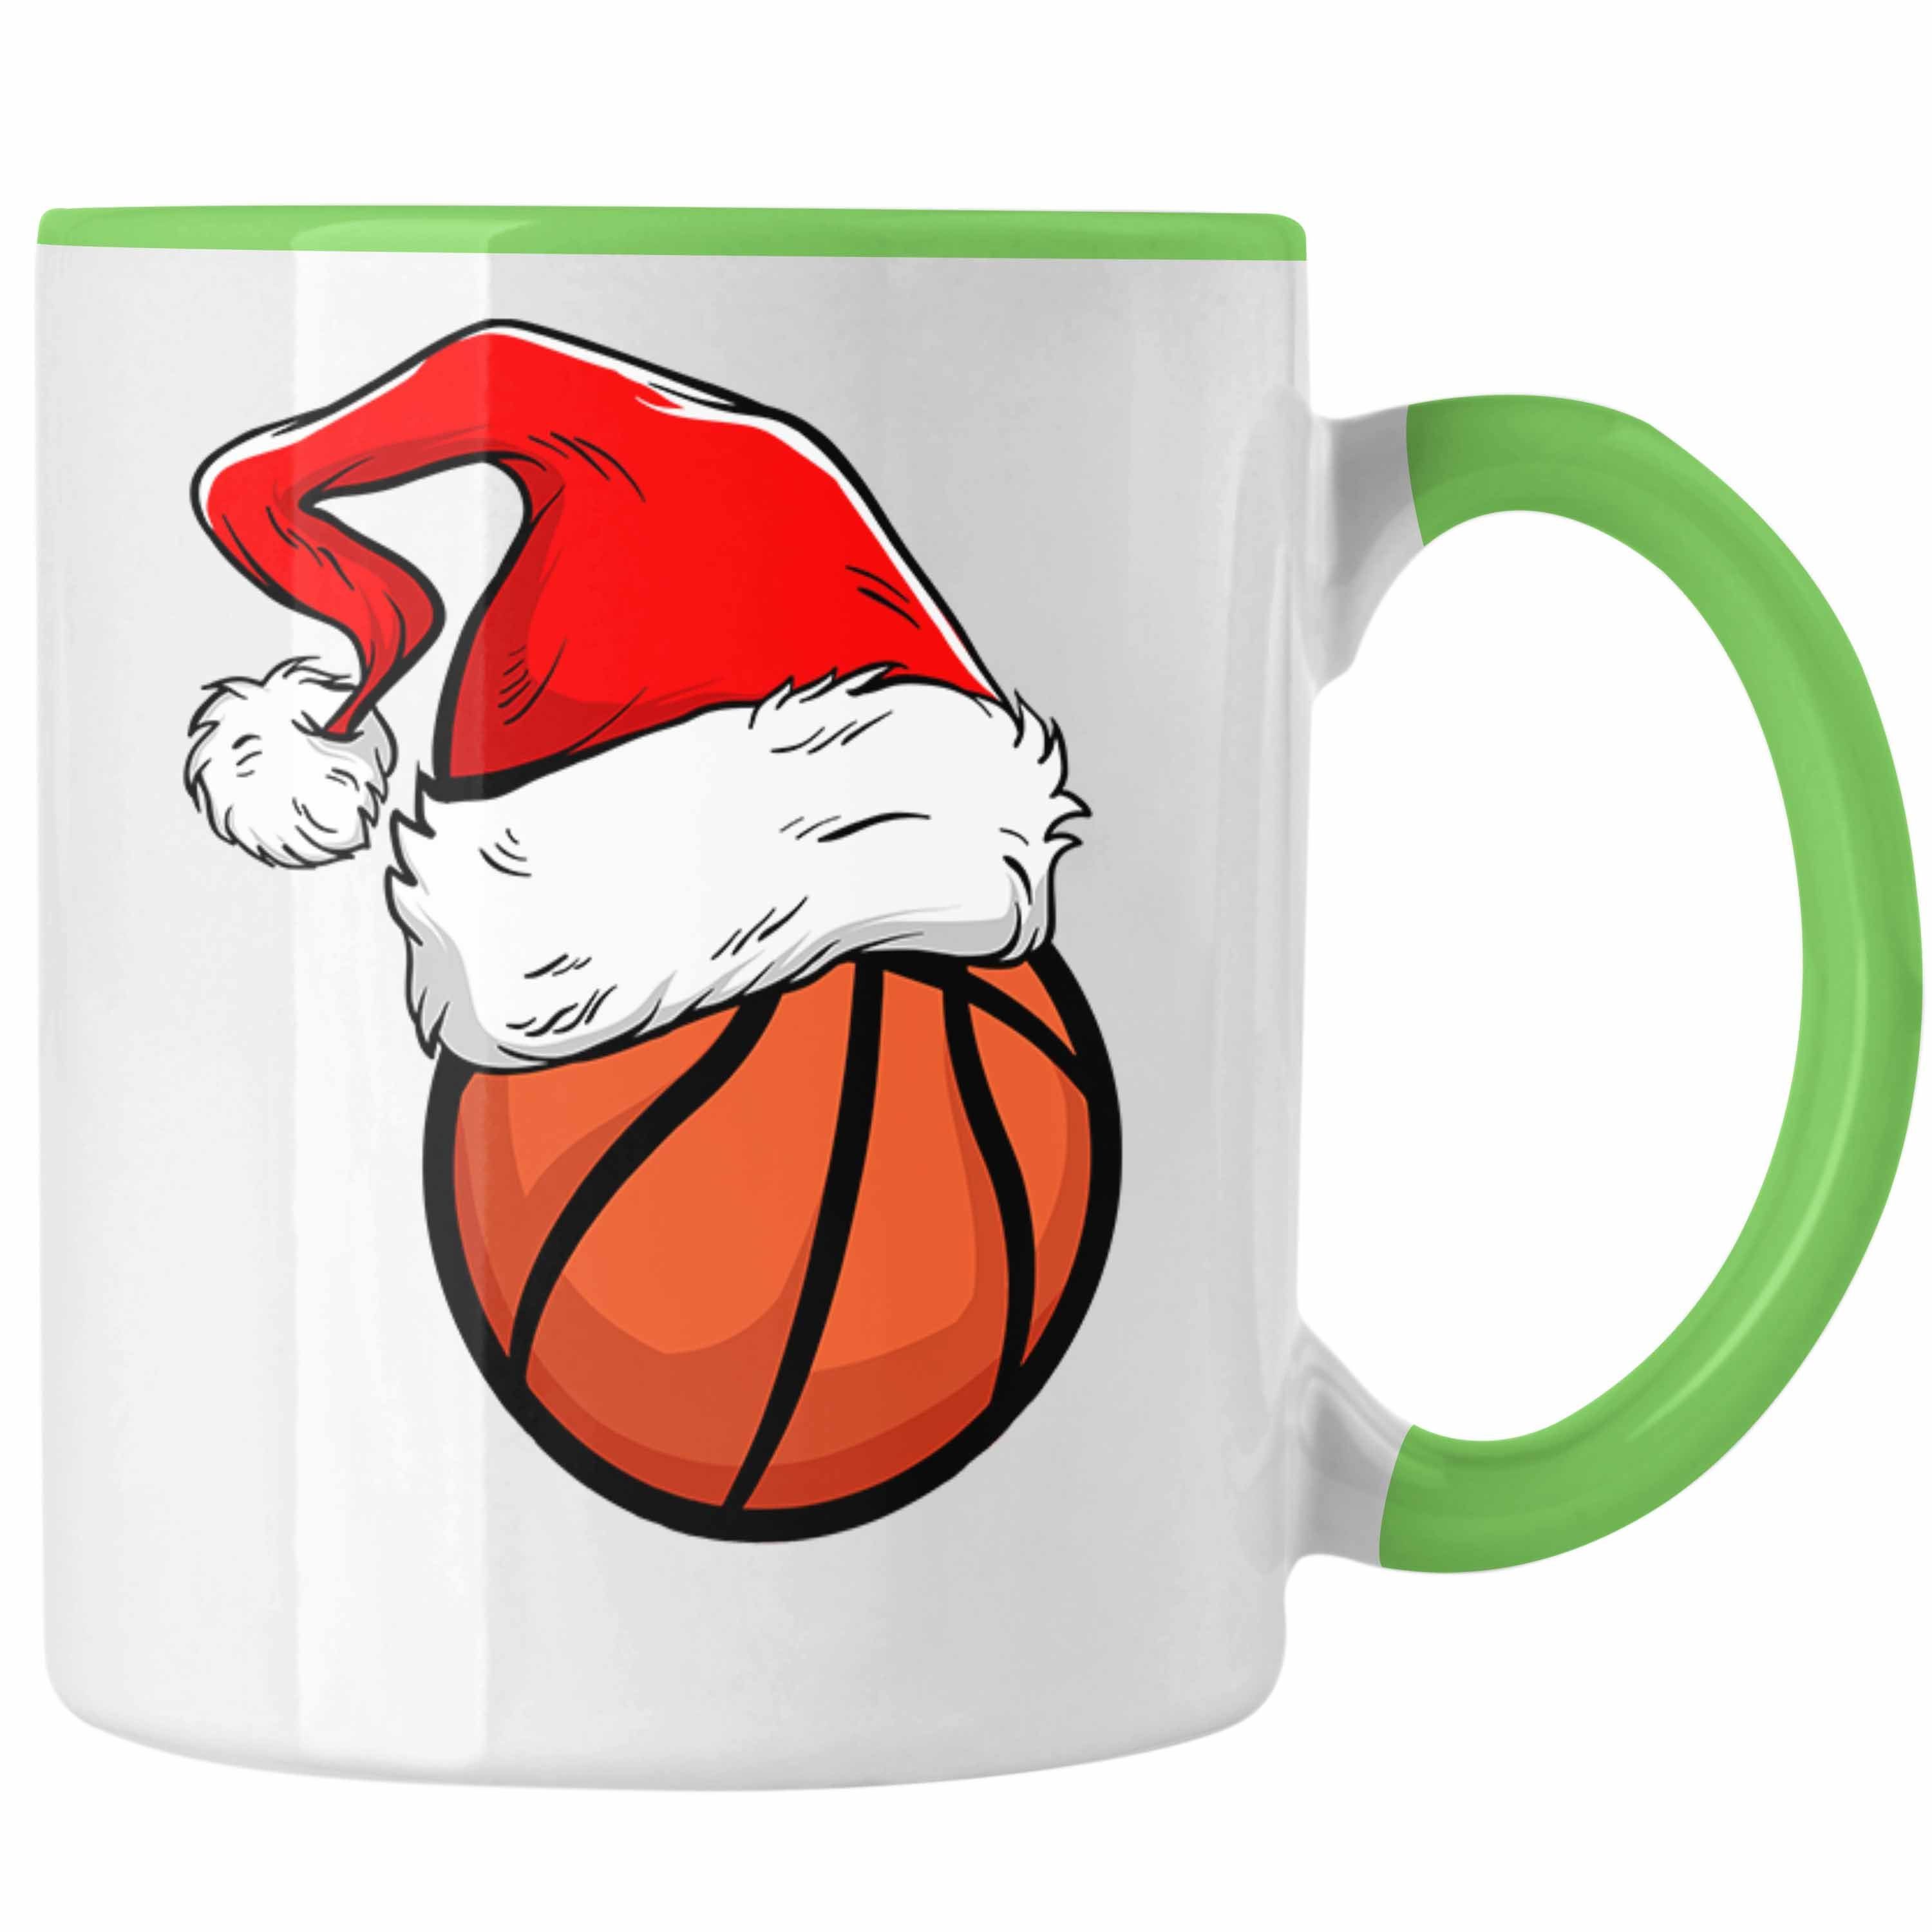 Trendation Tasse Trendation - Basketball Weihnachten Tasse Geschenk Basketballspieler Geschenkidee Grün